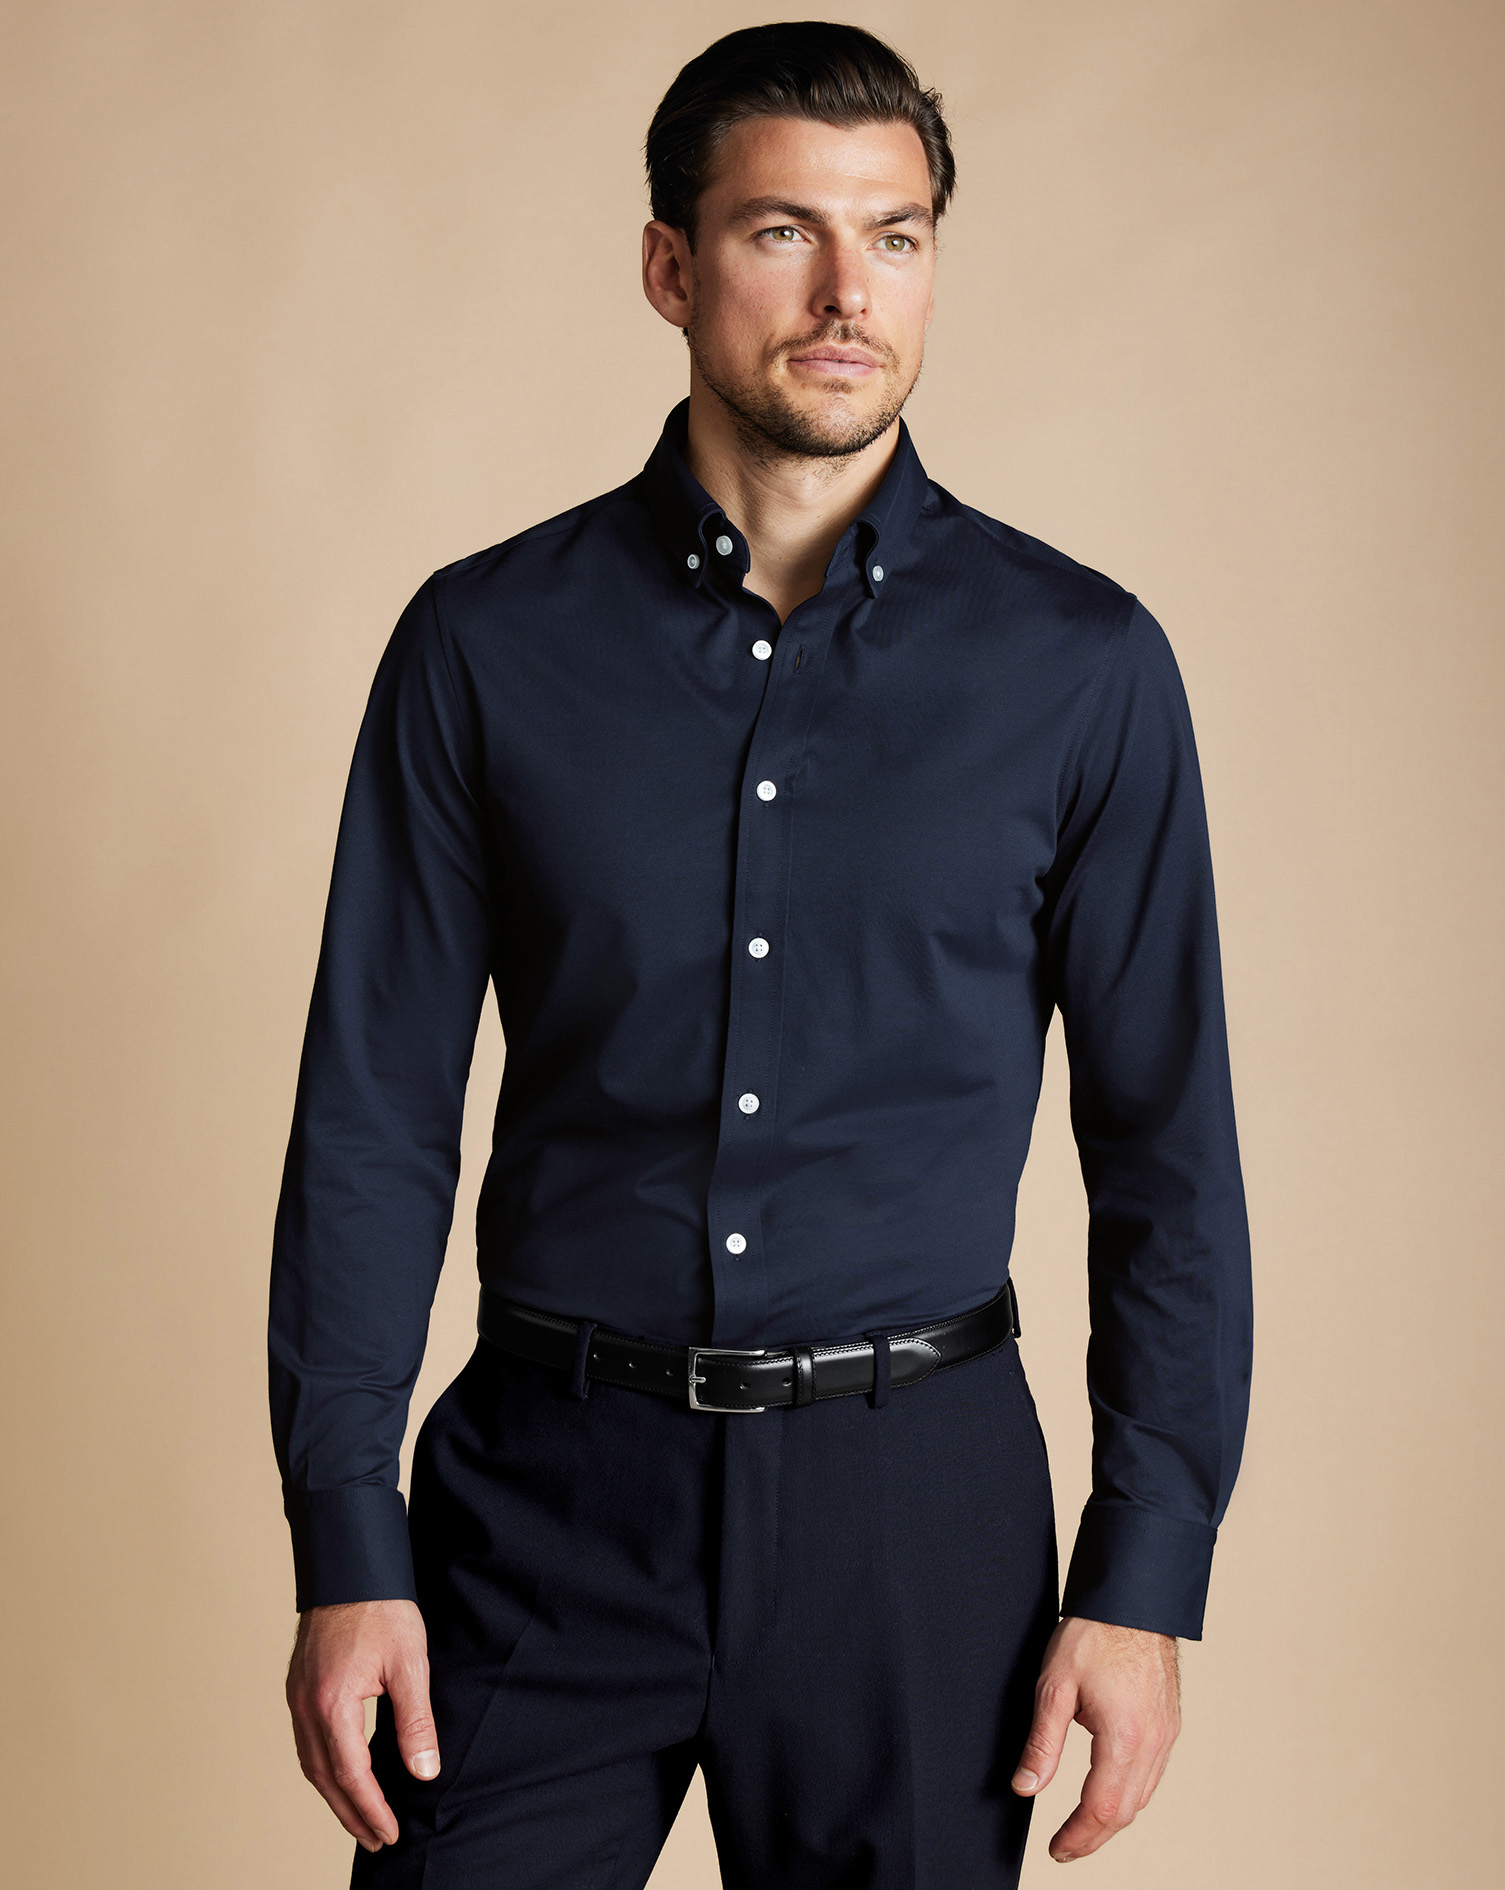 Men's Charles Tyrwhitt 4-Way Stretch Jersey Casual Shirt - Navy Blue Size Small Cotton
